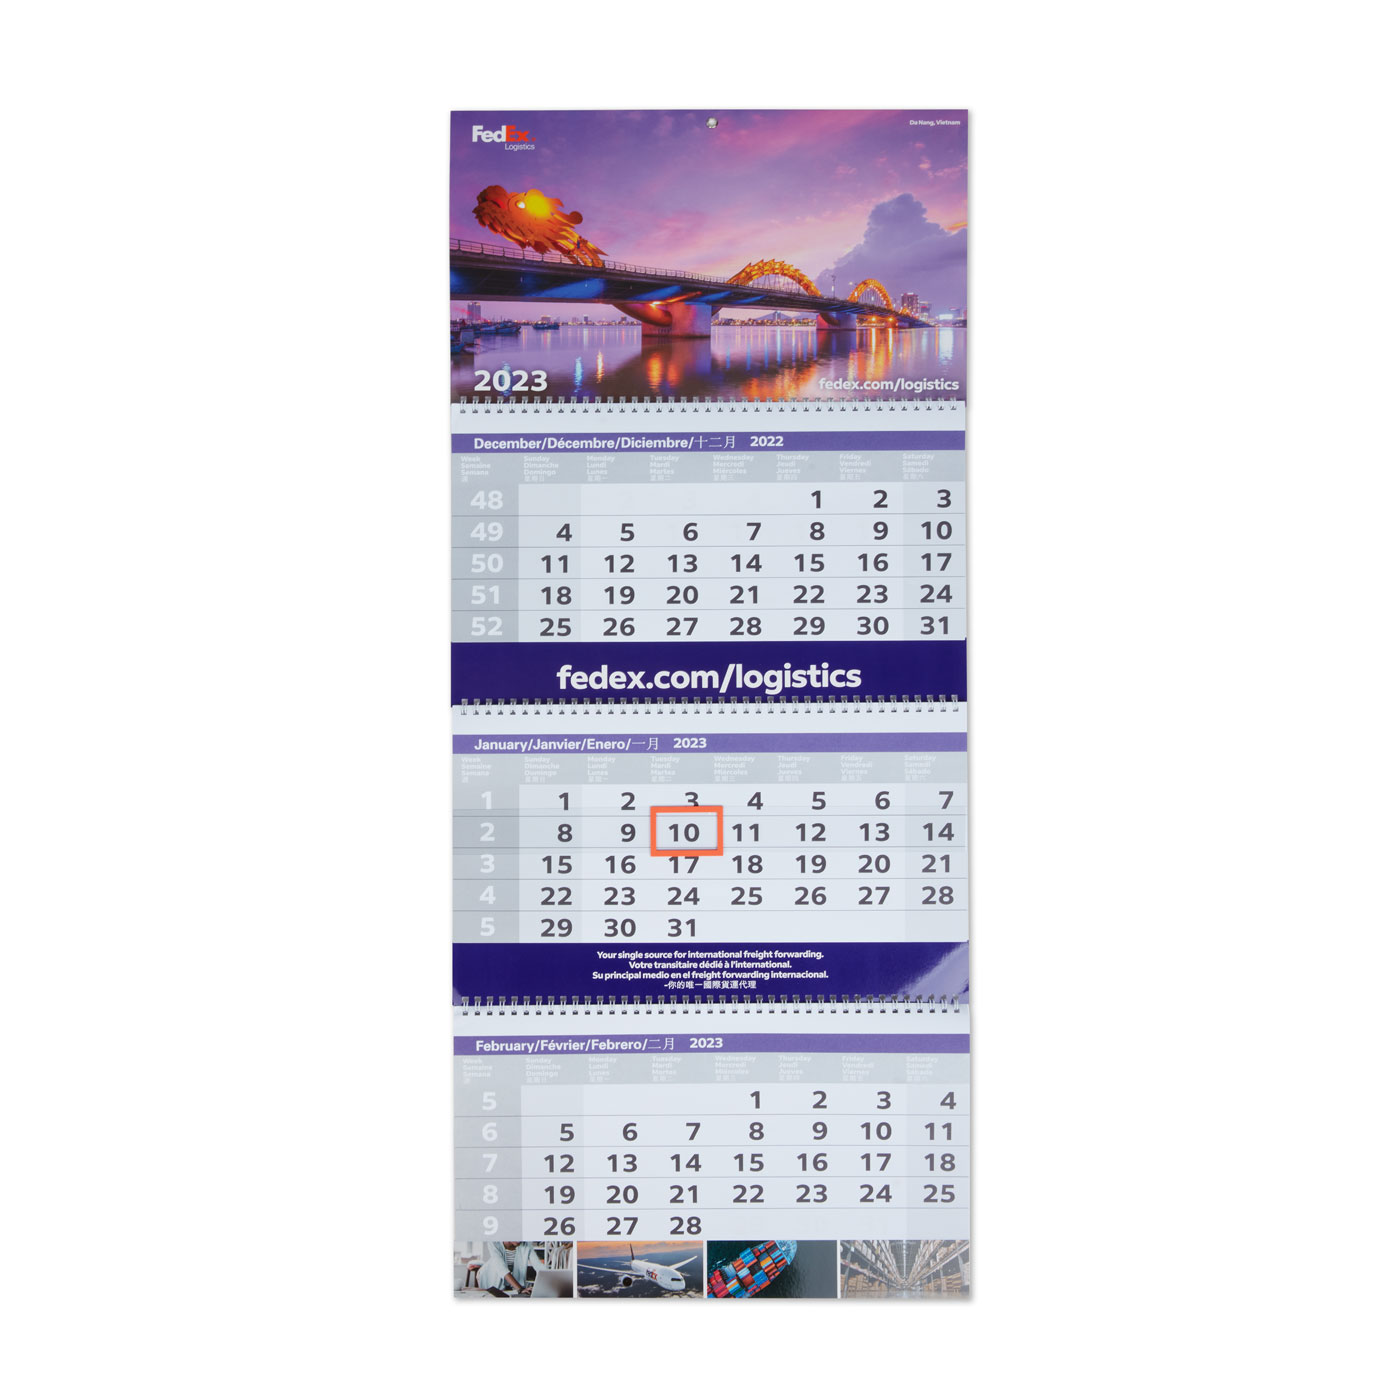 FedEx Logistics 2023 Calendar (25 Pack) The FedEx Company Store